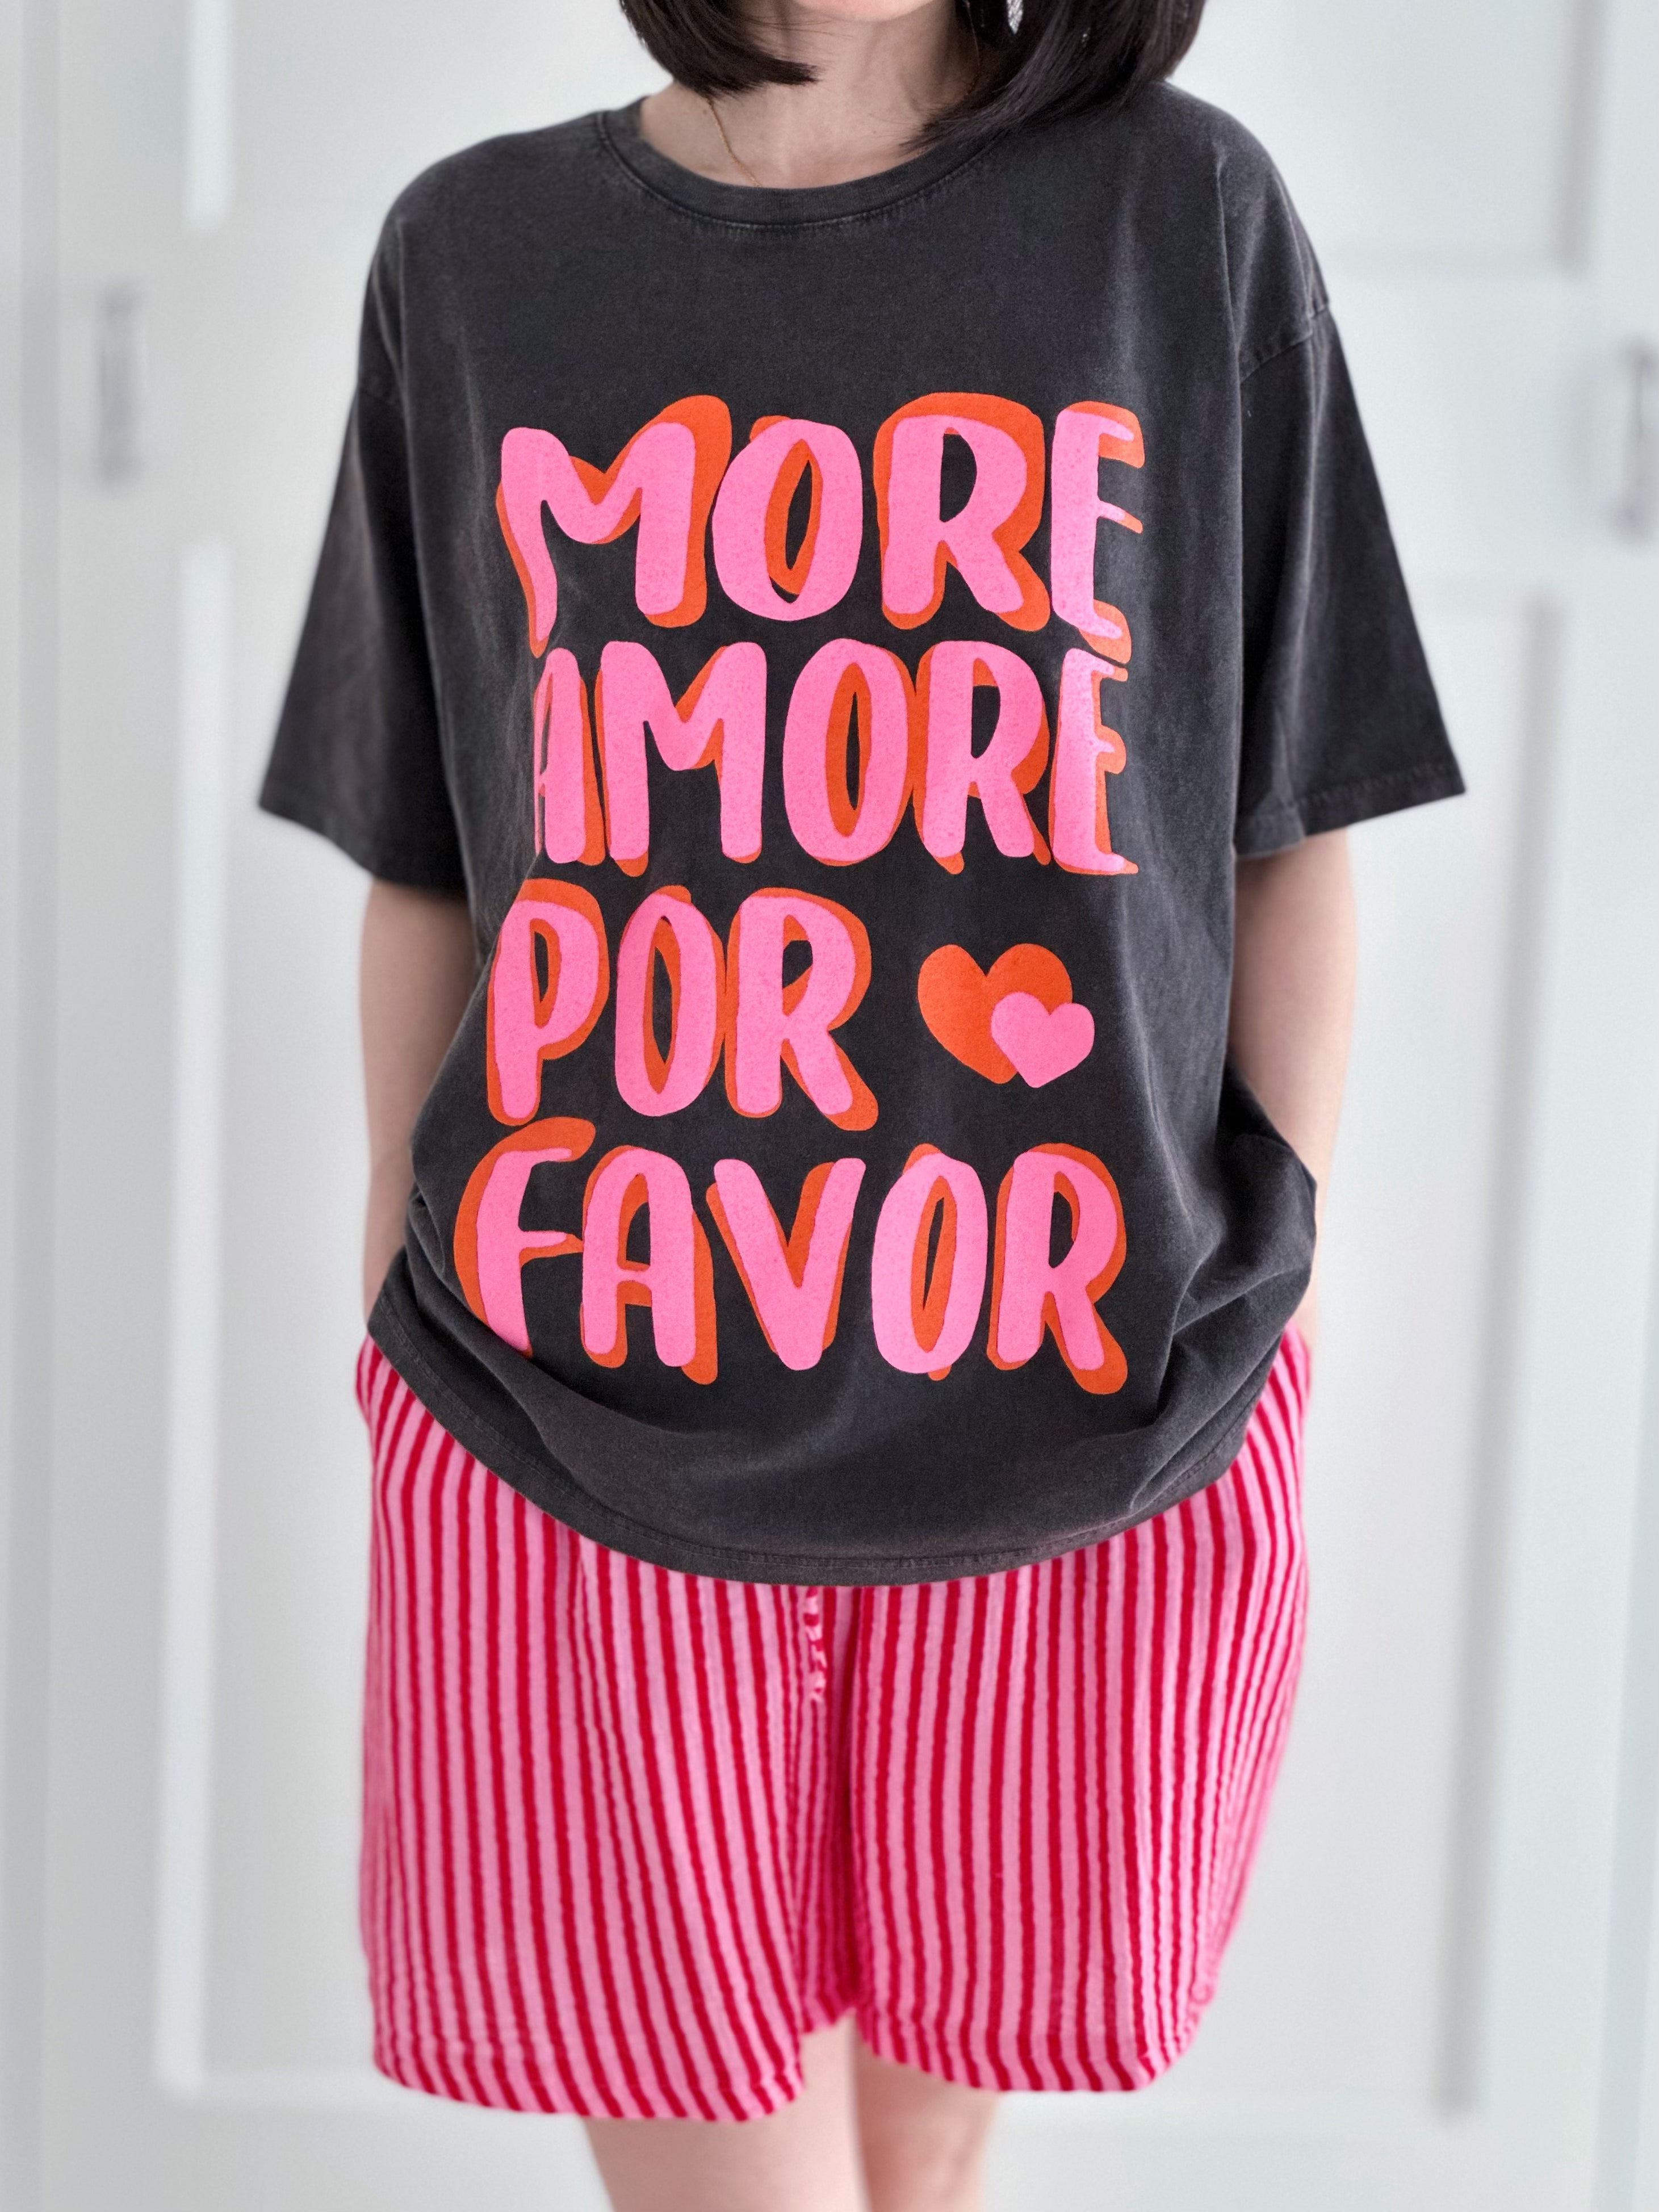 T-Shirt, Amore, 2 Farben